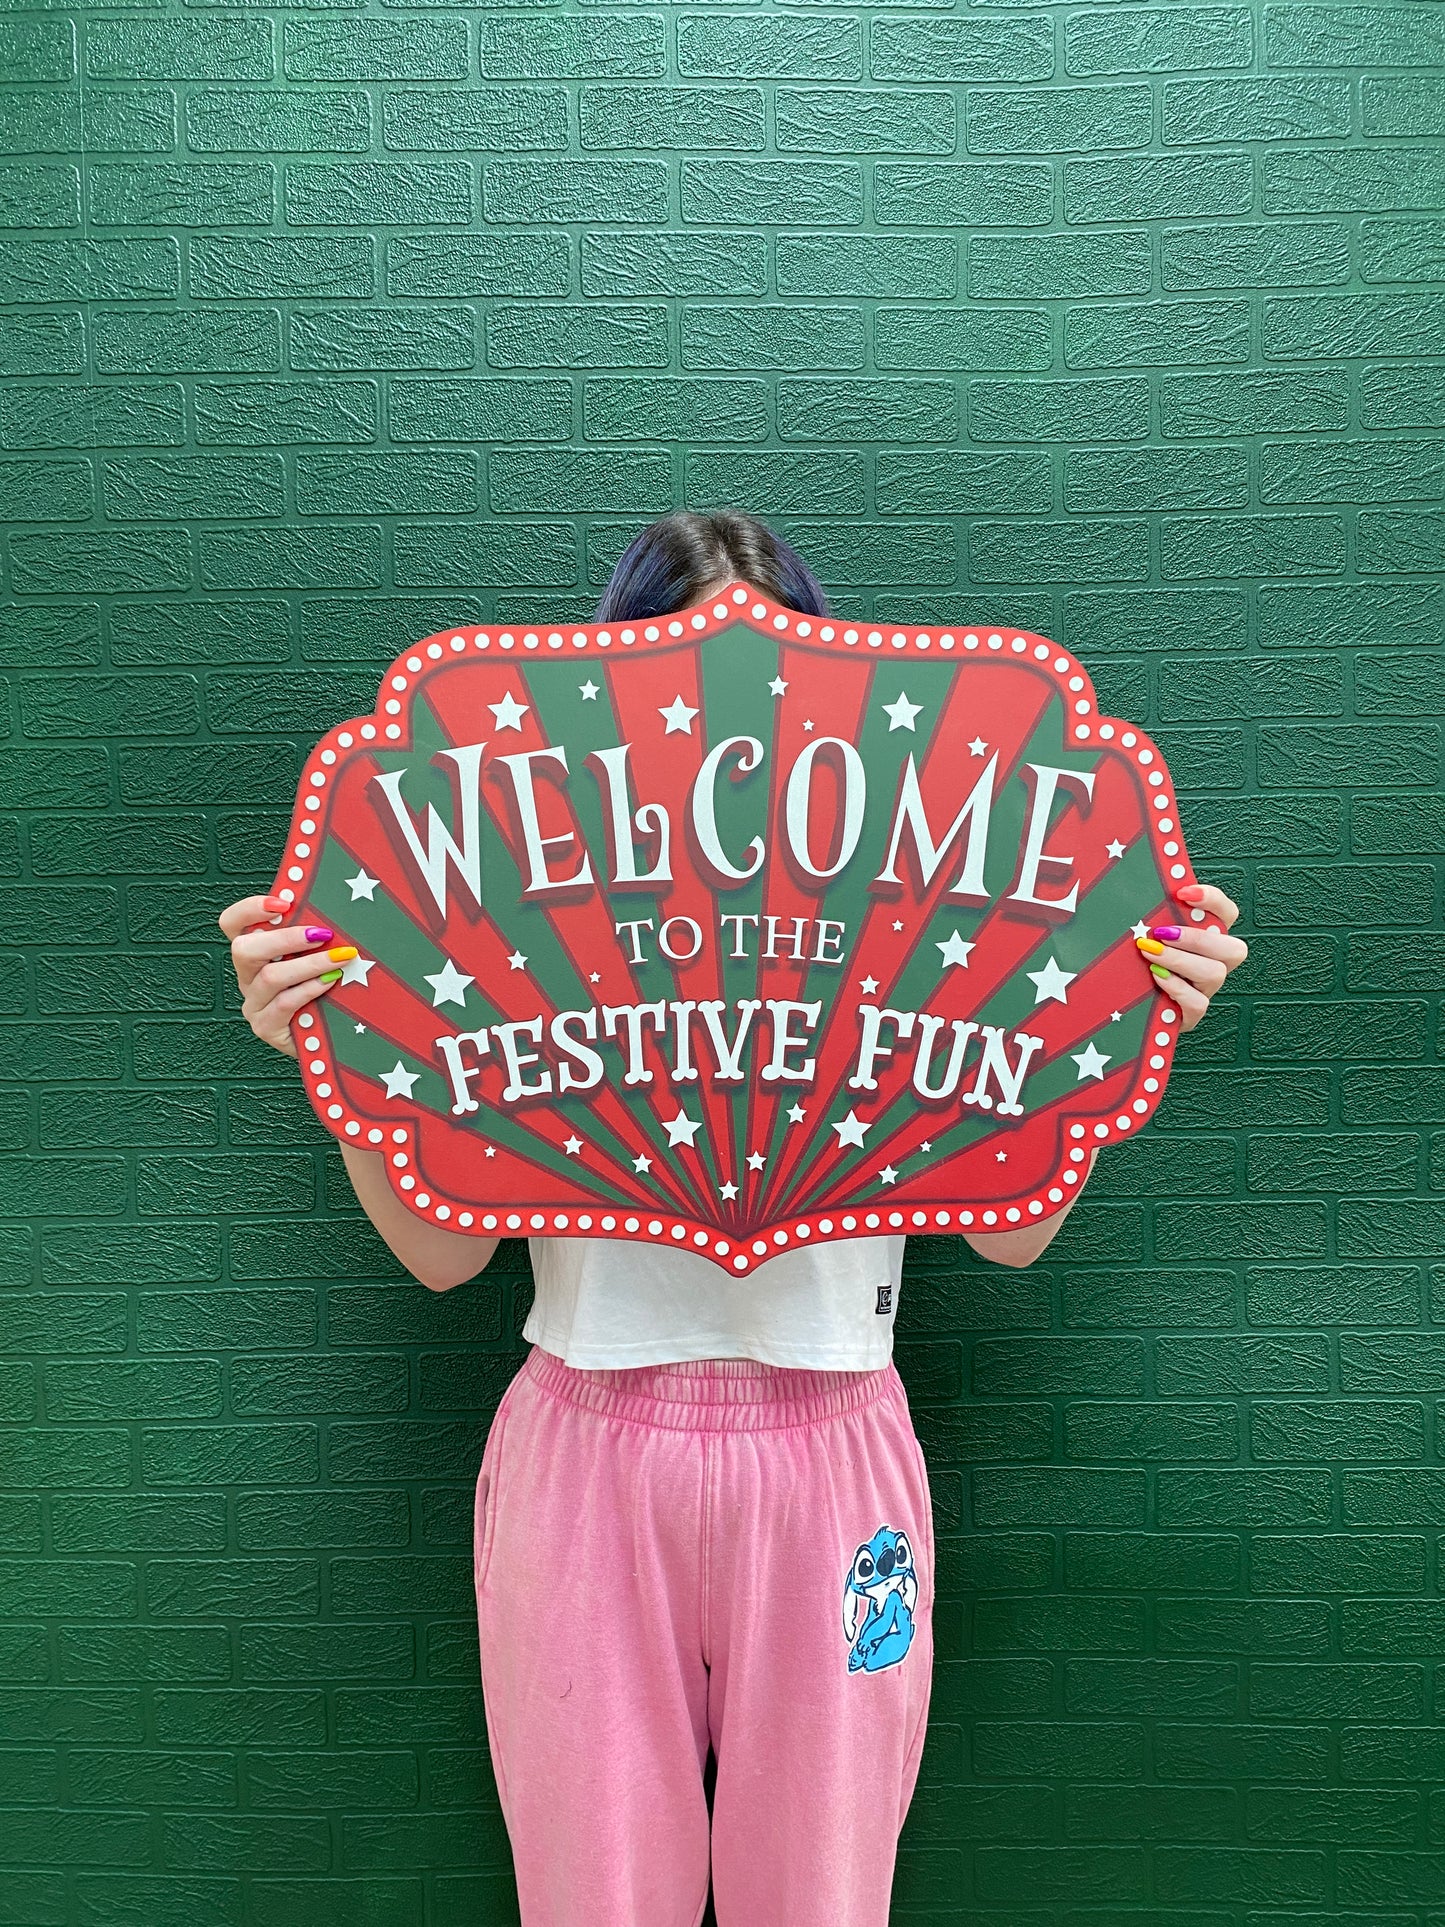 Festive Fun Welcome Sign